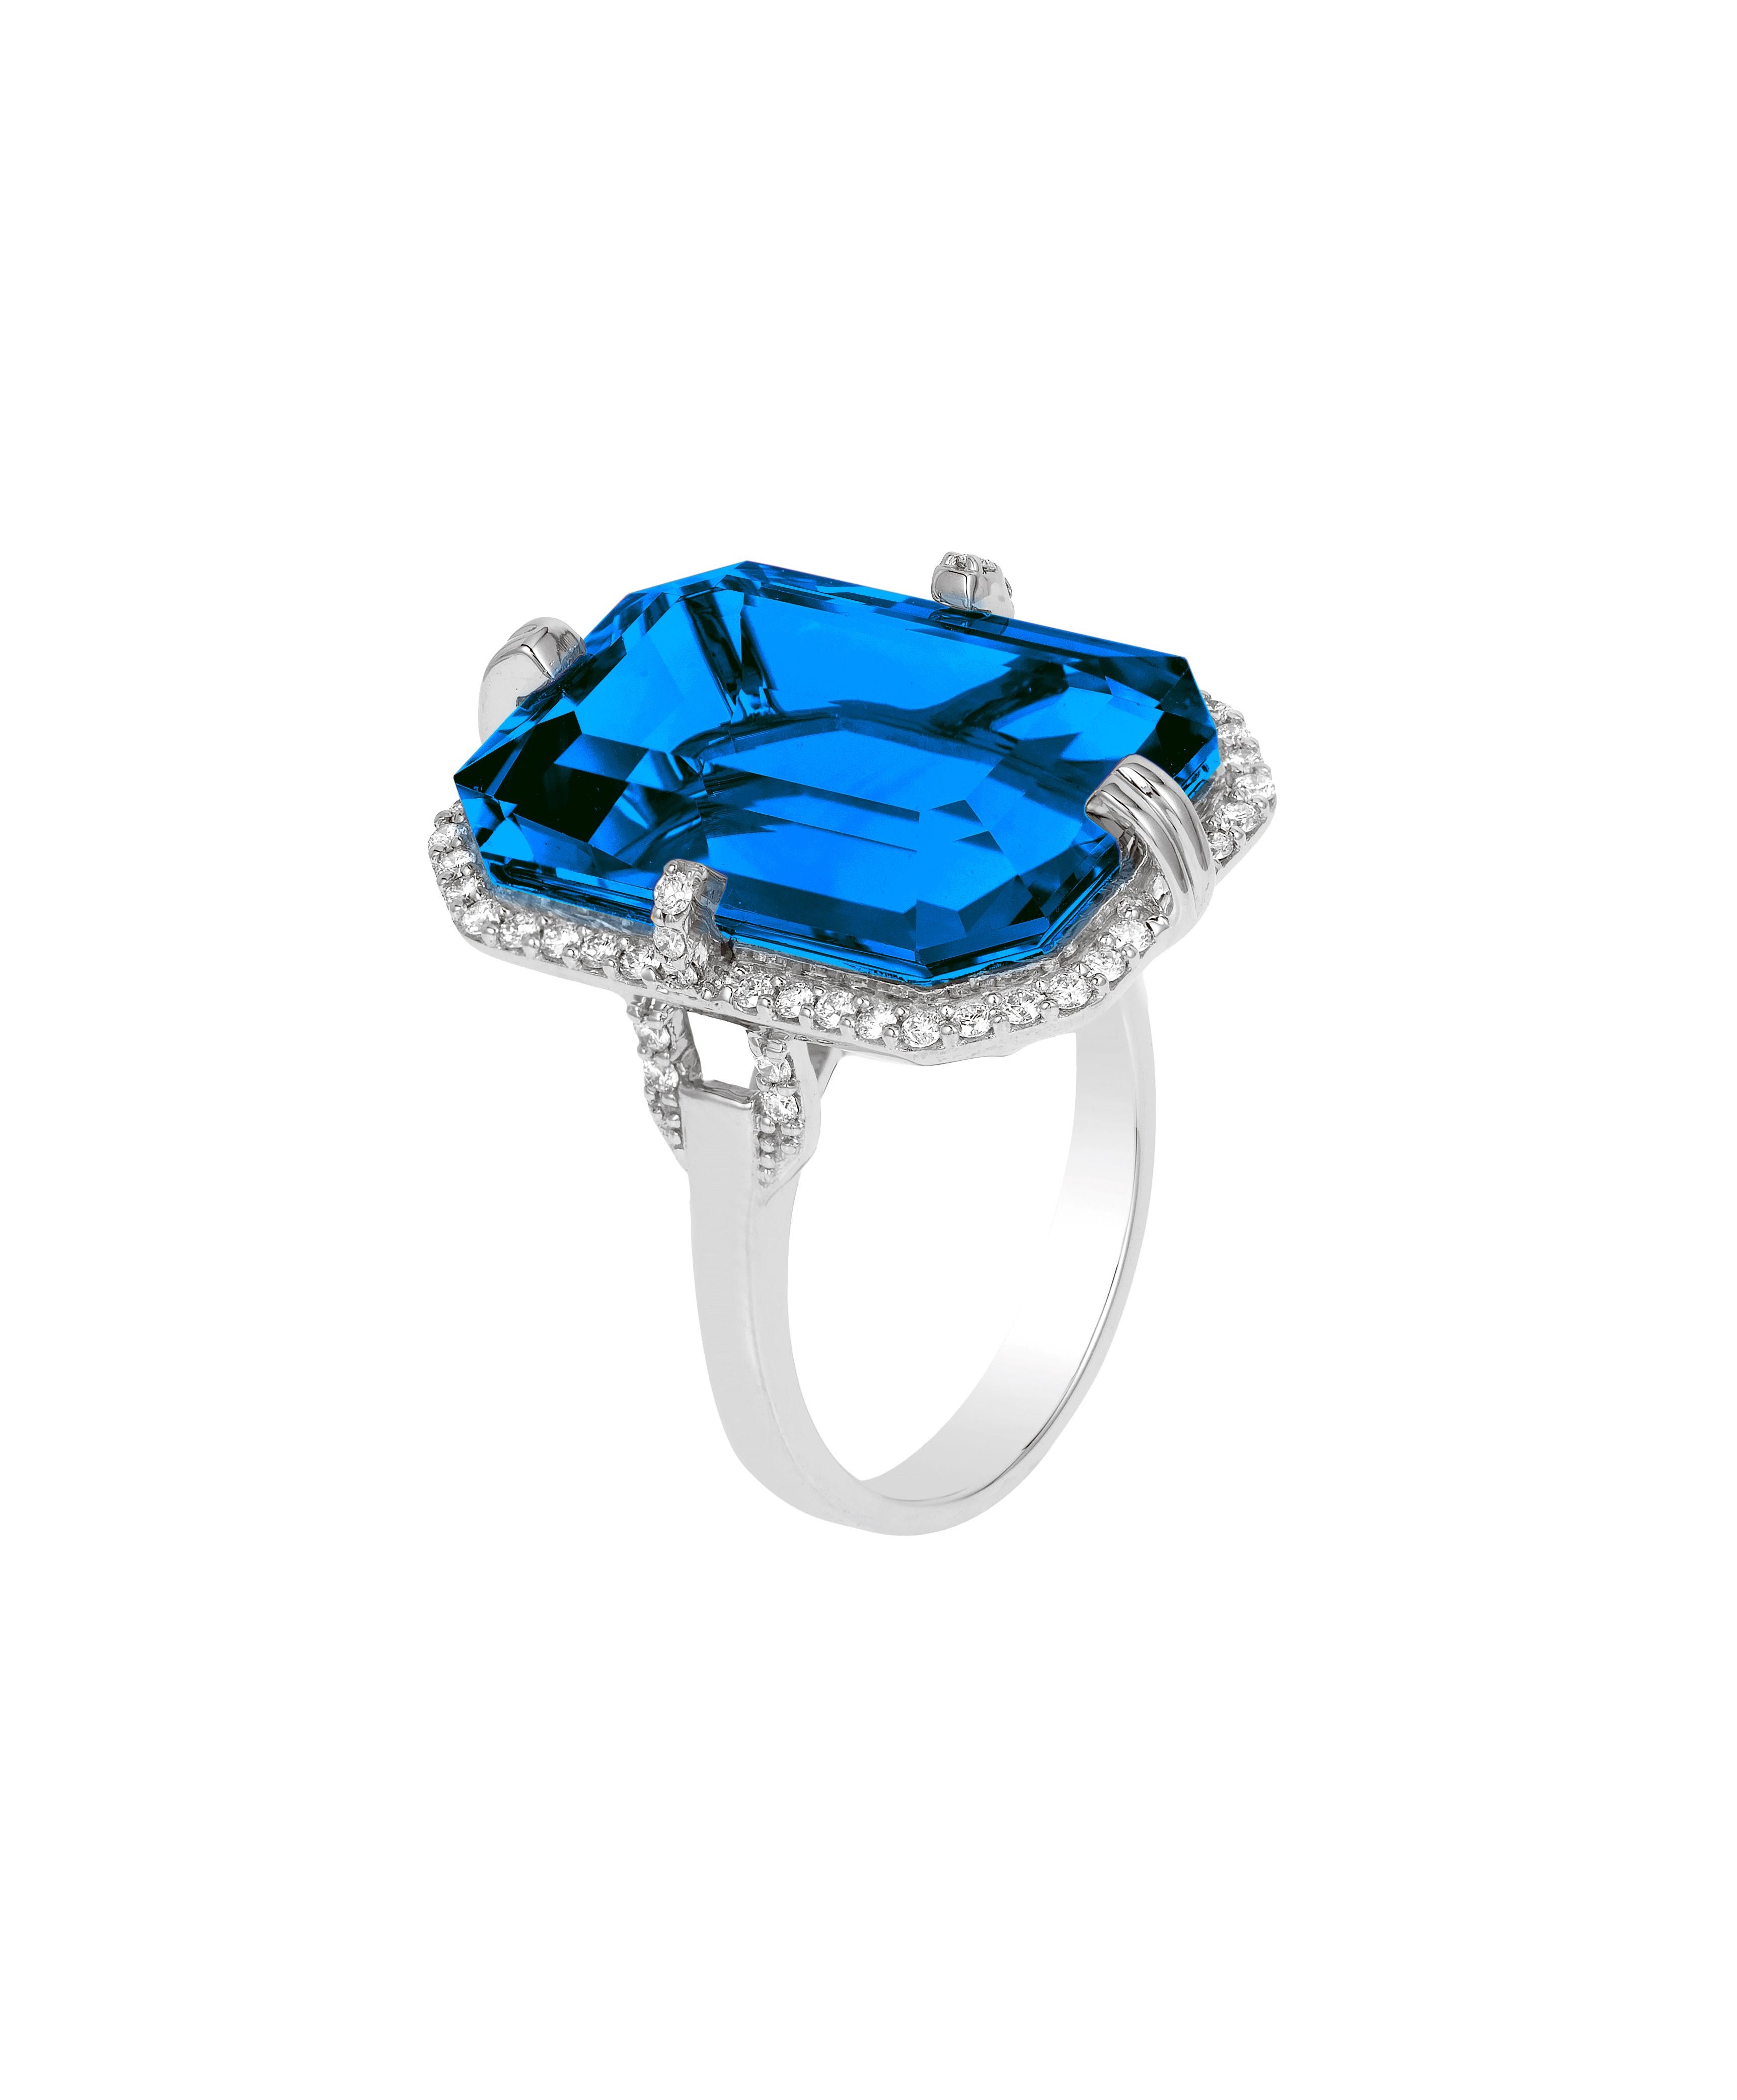 Emerald Cut Goshwara London Blue Topaz with Diamonds Ring For Sale